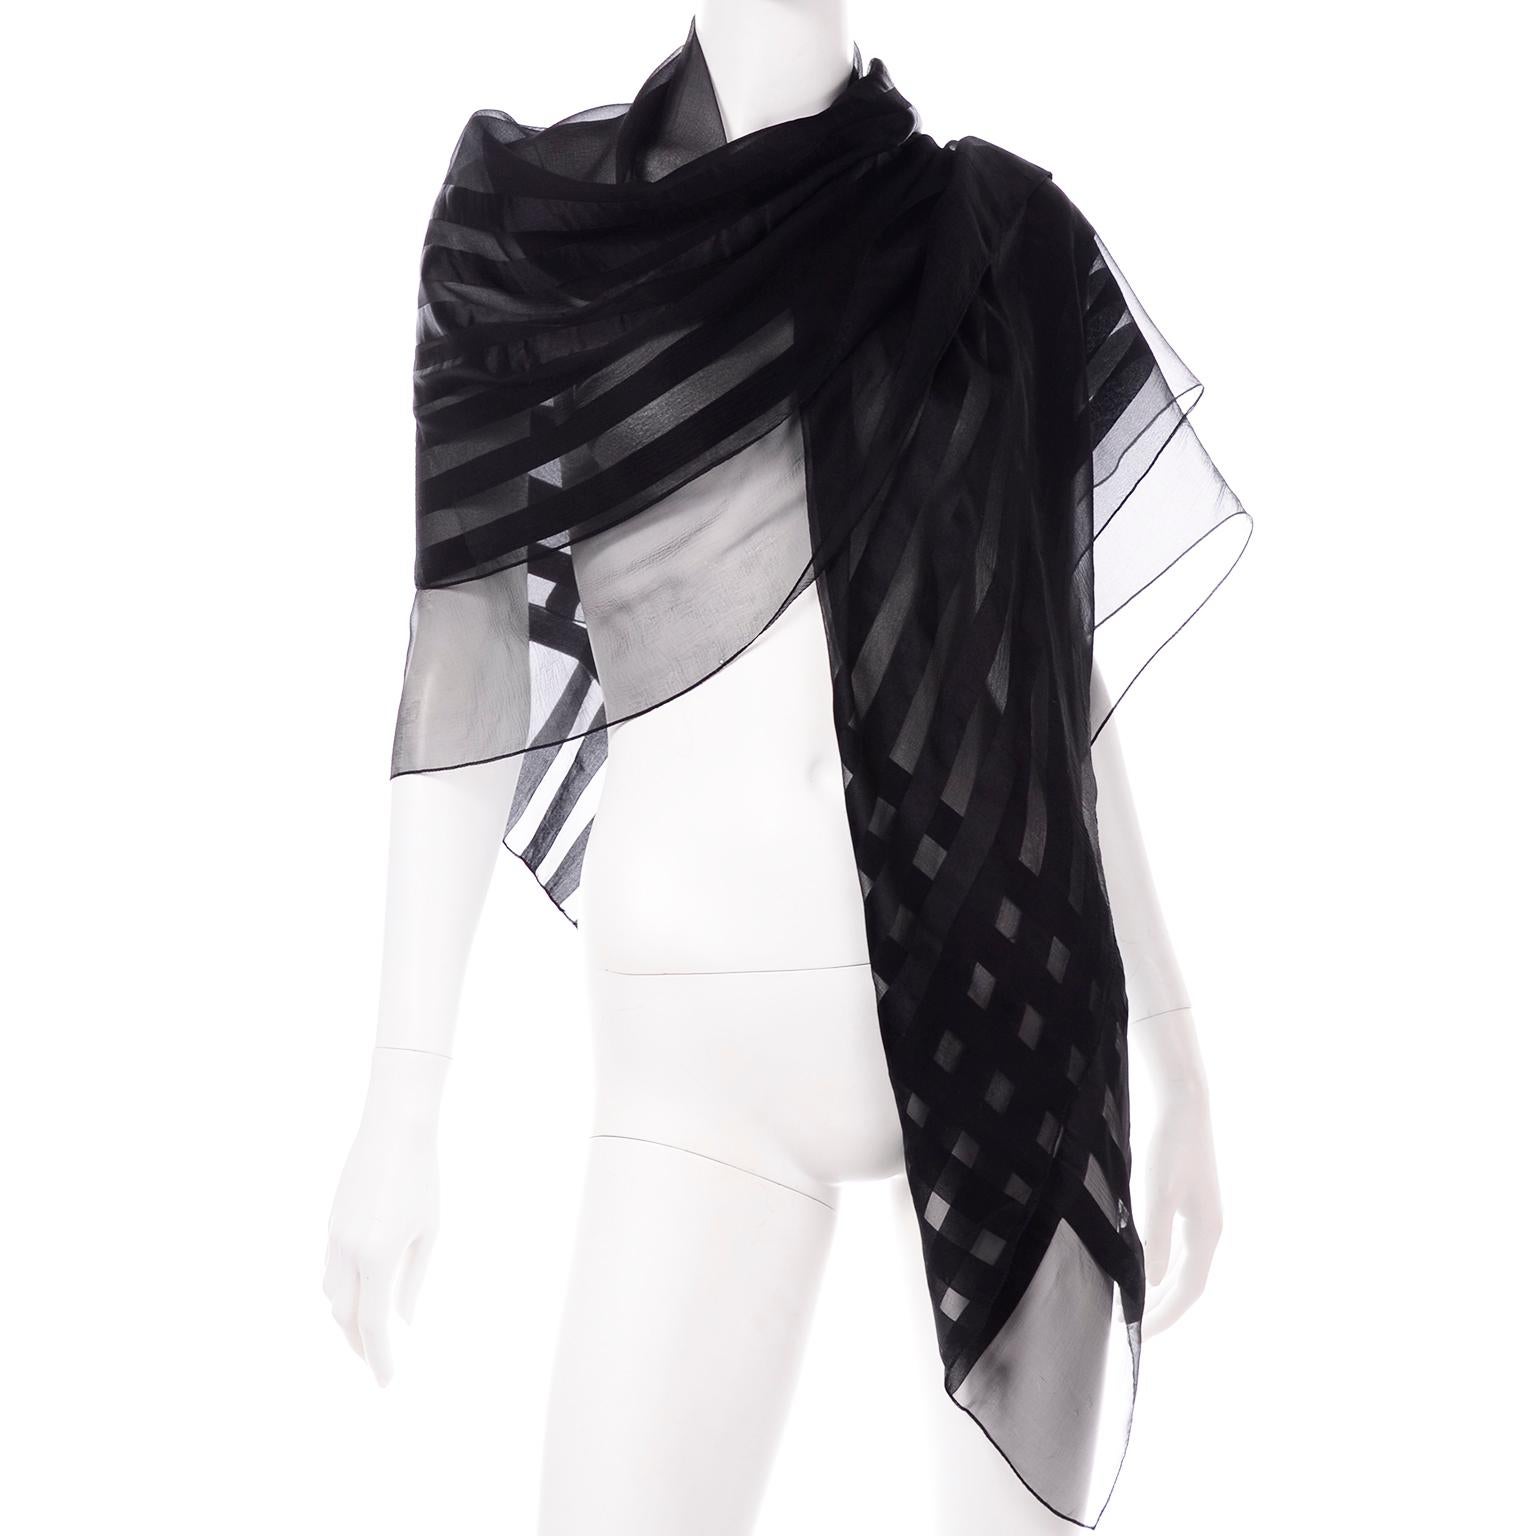 Women's Yves Saint Laurent Foulards Silk Oversized Large Black Sheer Scarf or Shawl Wrap